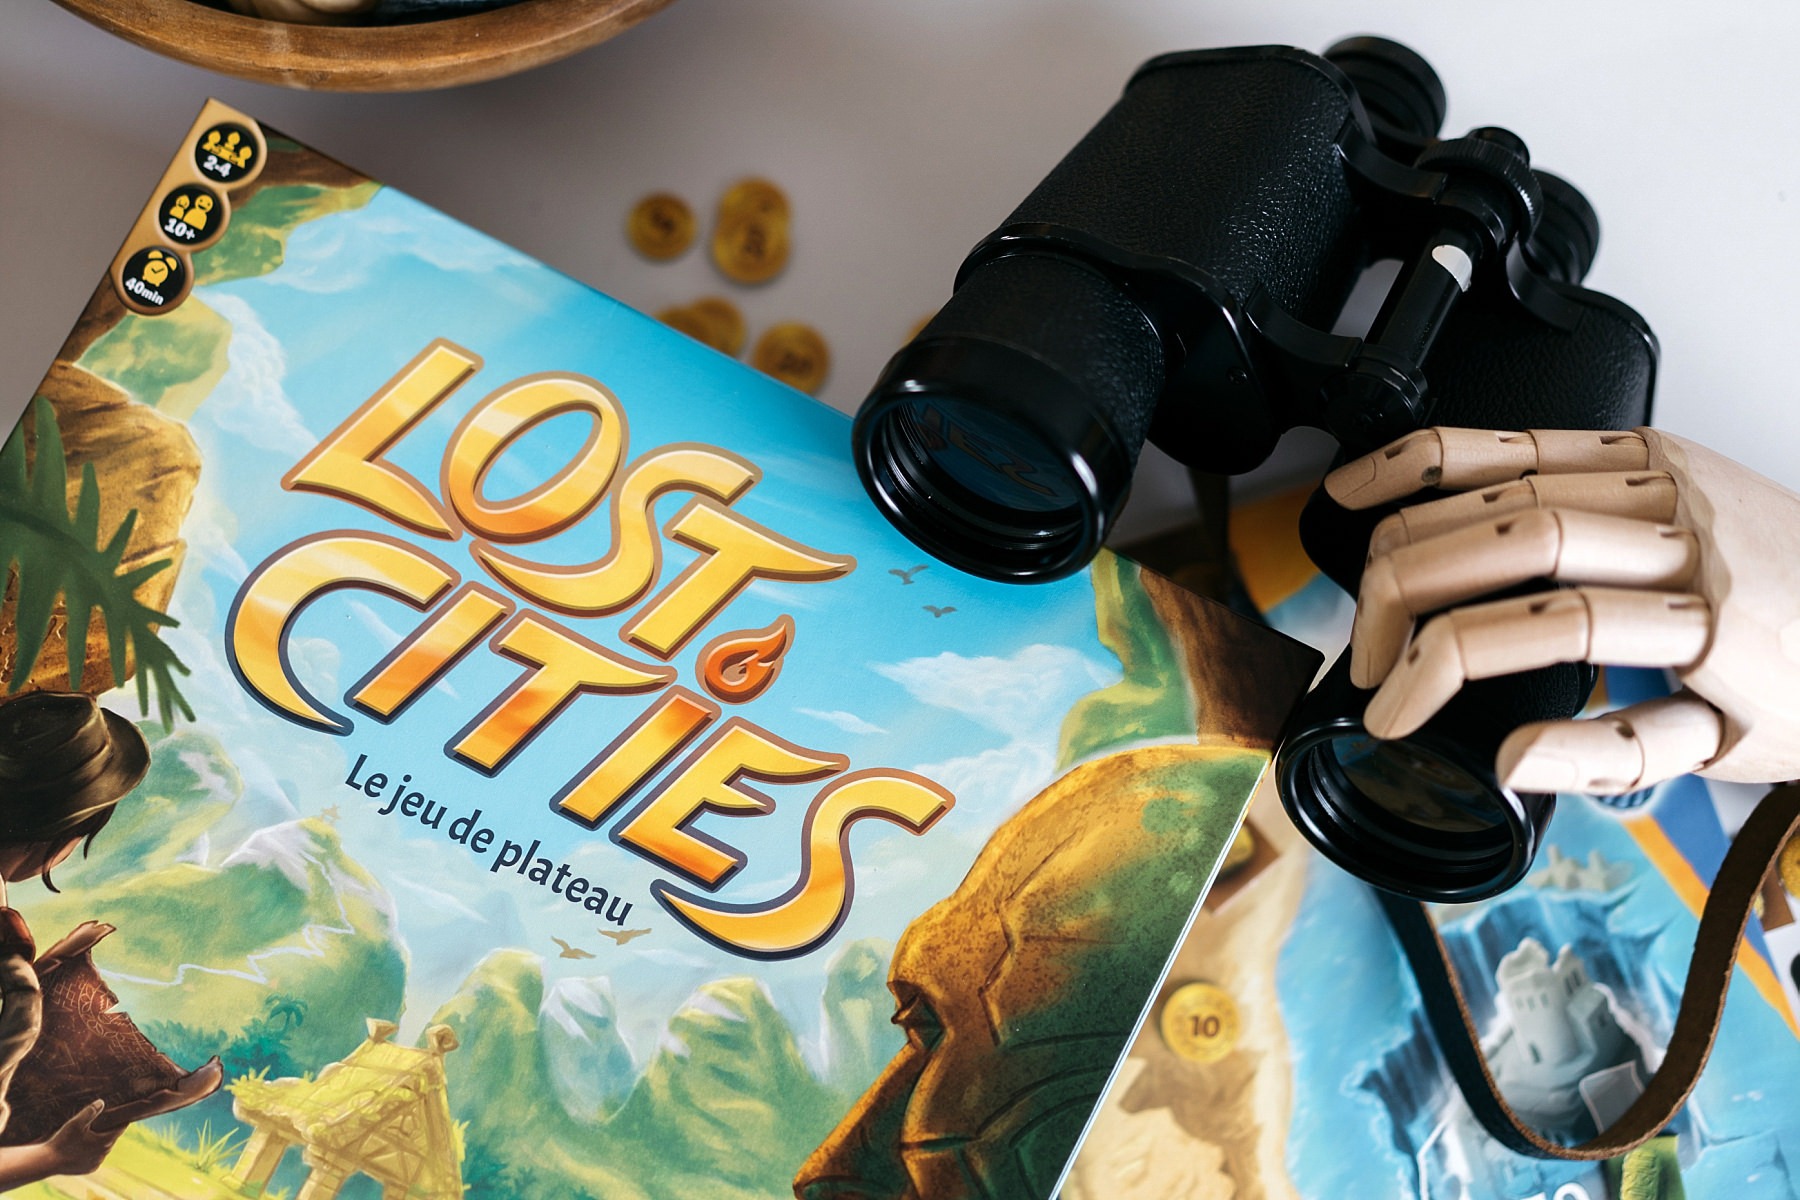 Lost cities jeu de plateau Iello